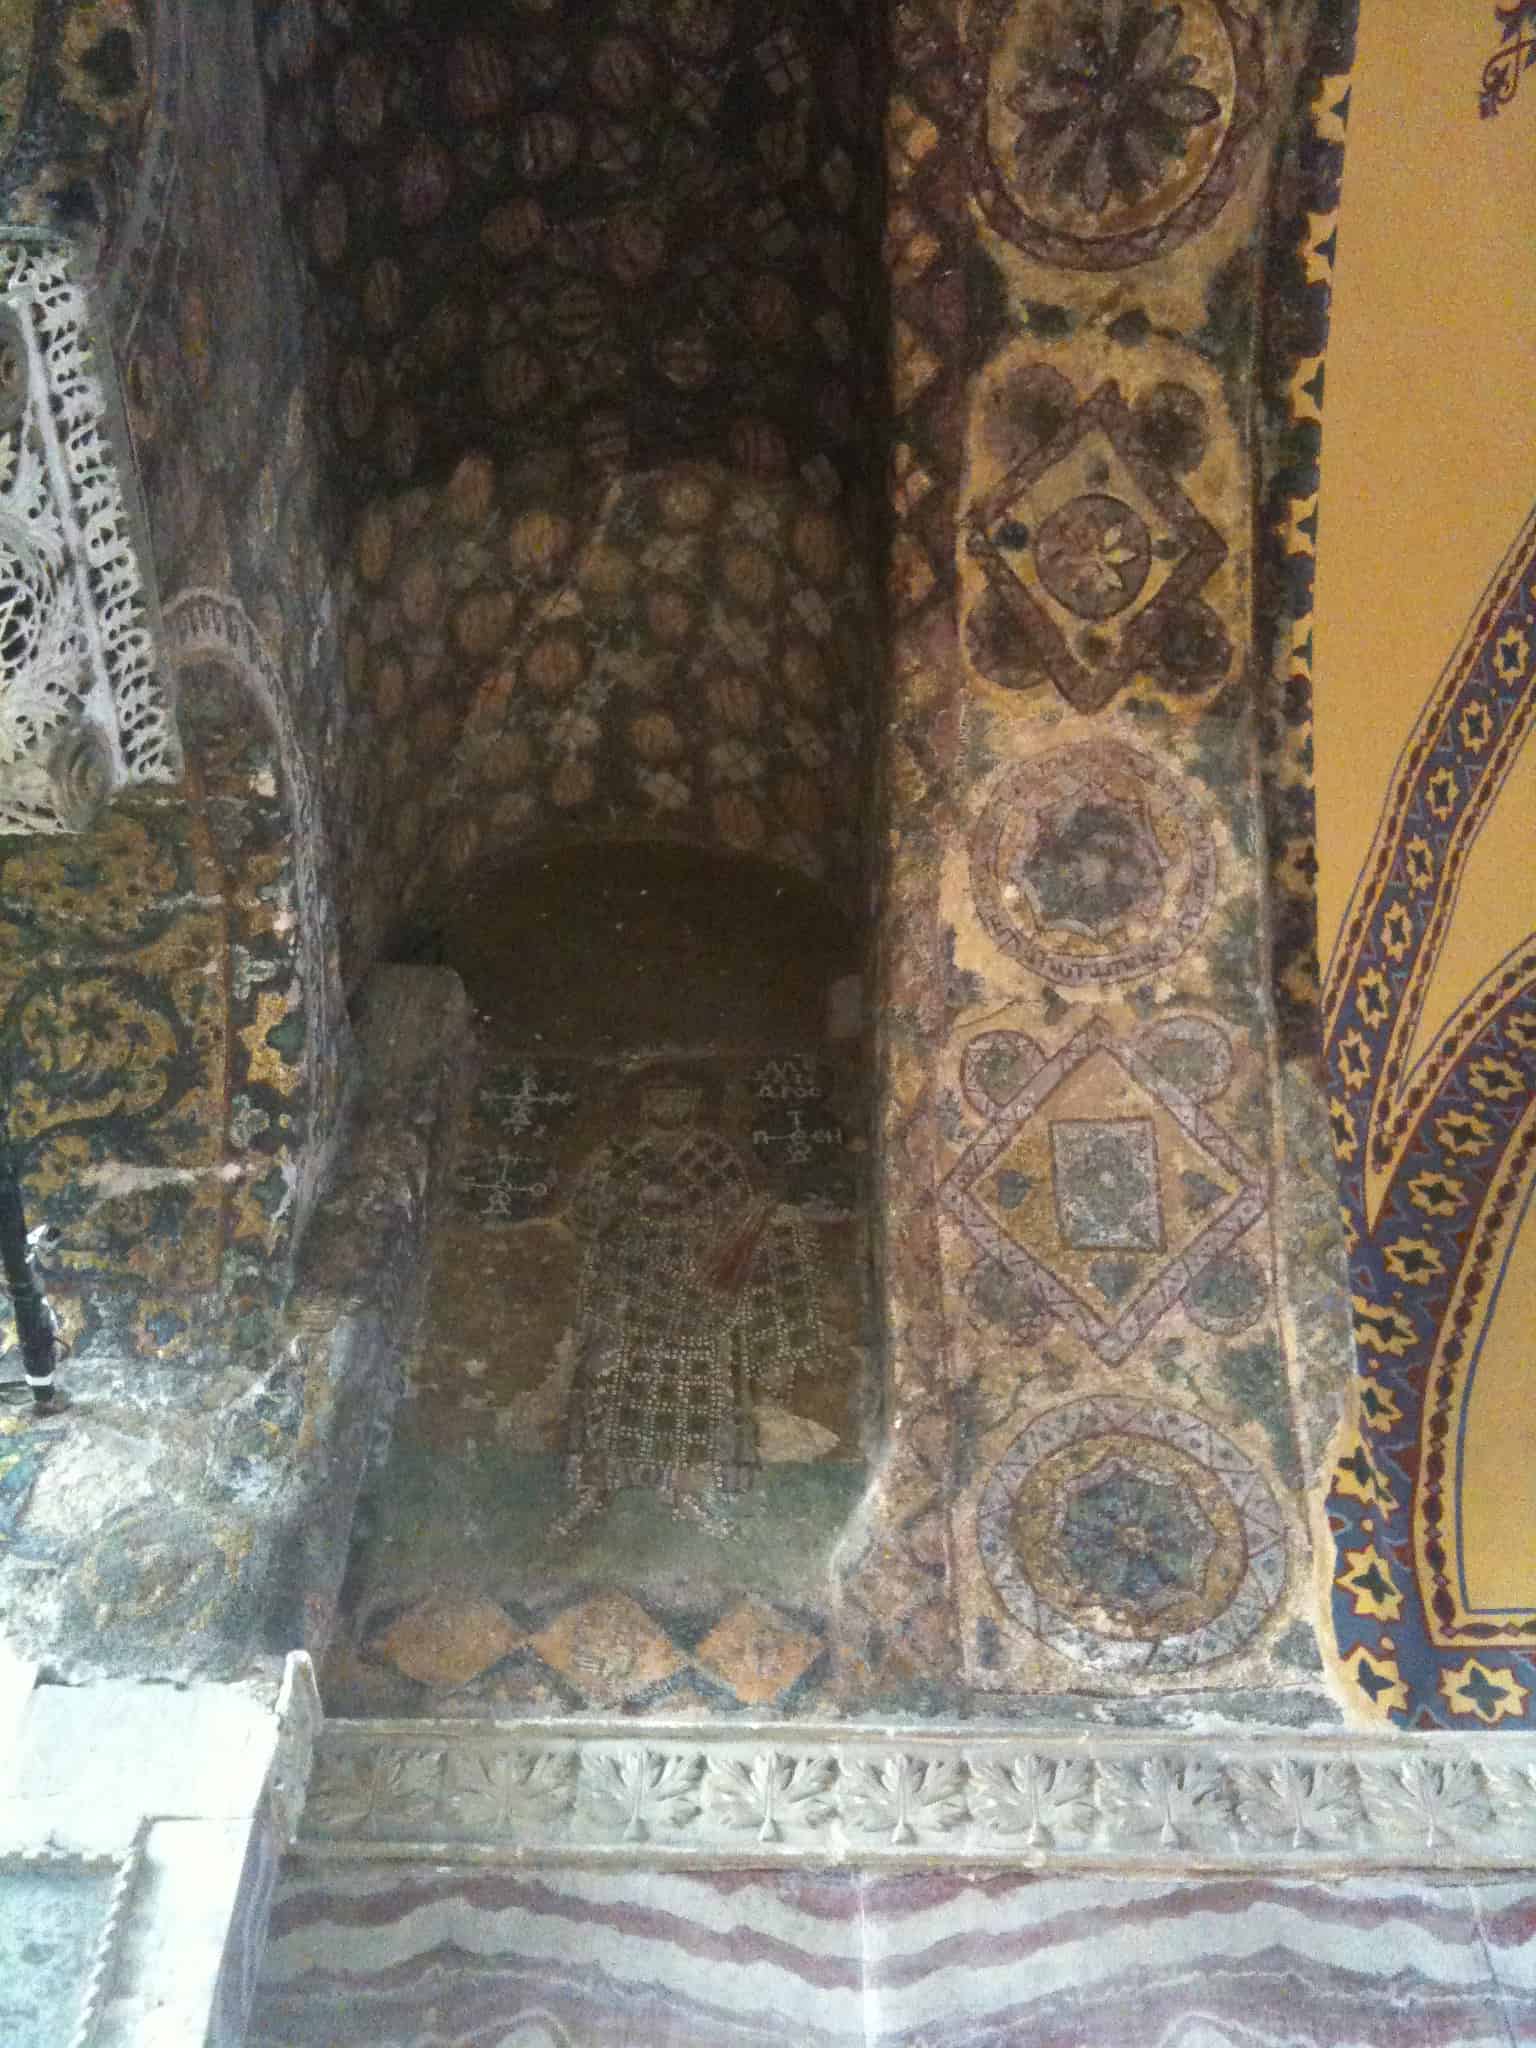 Mosaic of Emperor Alexander at Hagia Sophia in Istanbul, Turkey